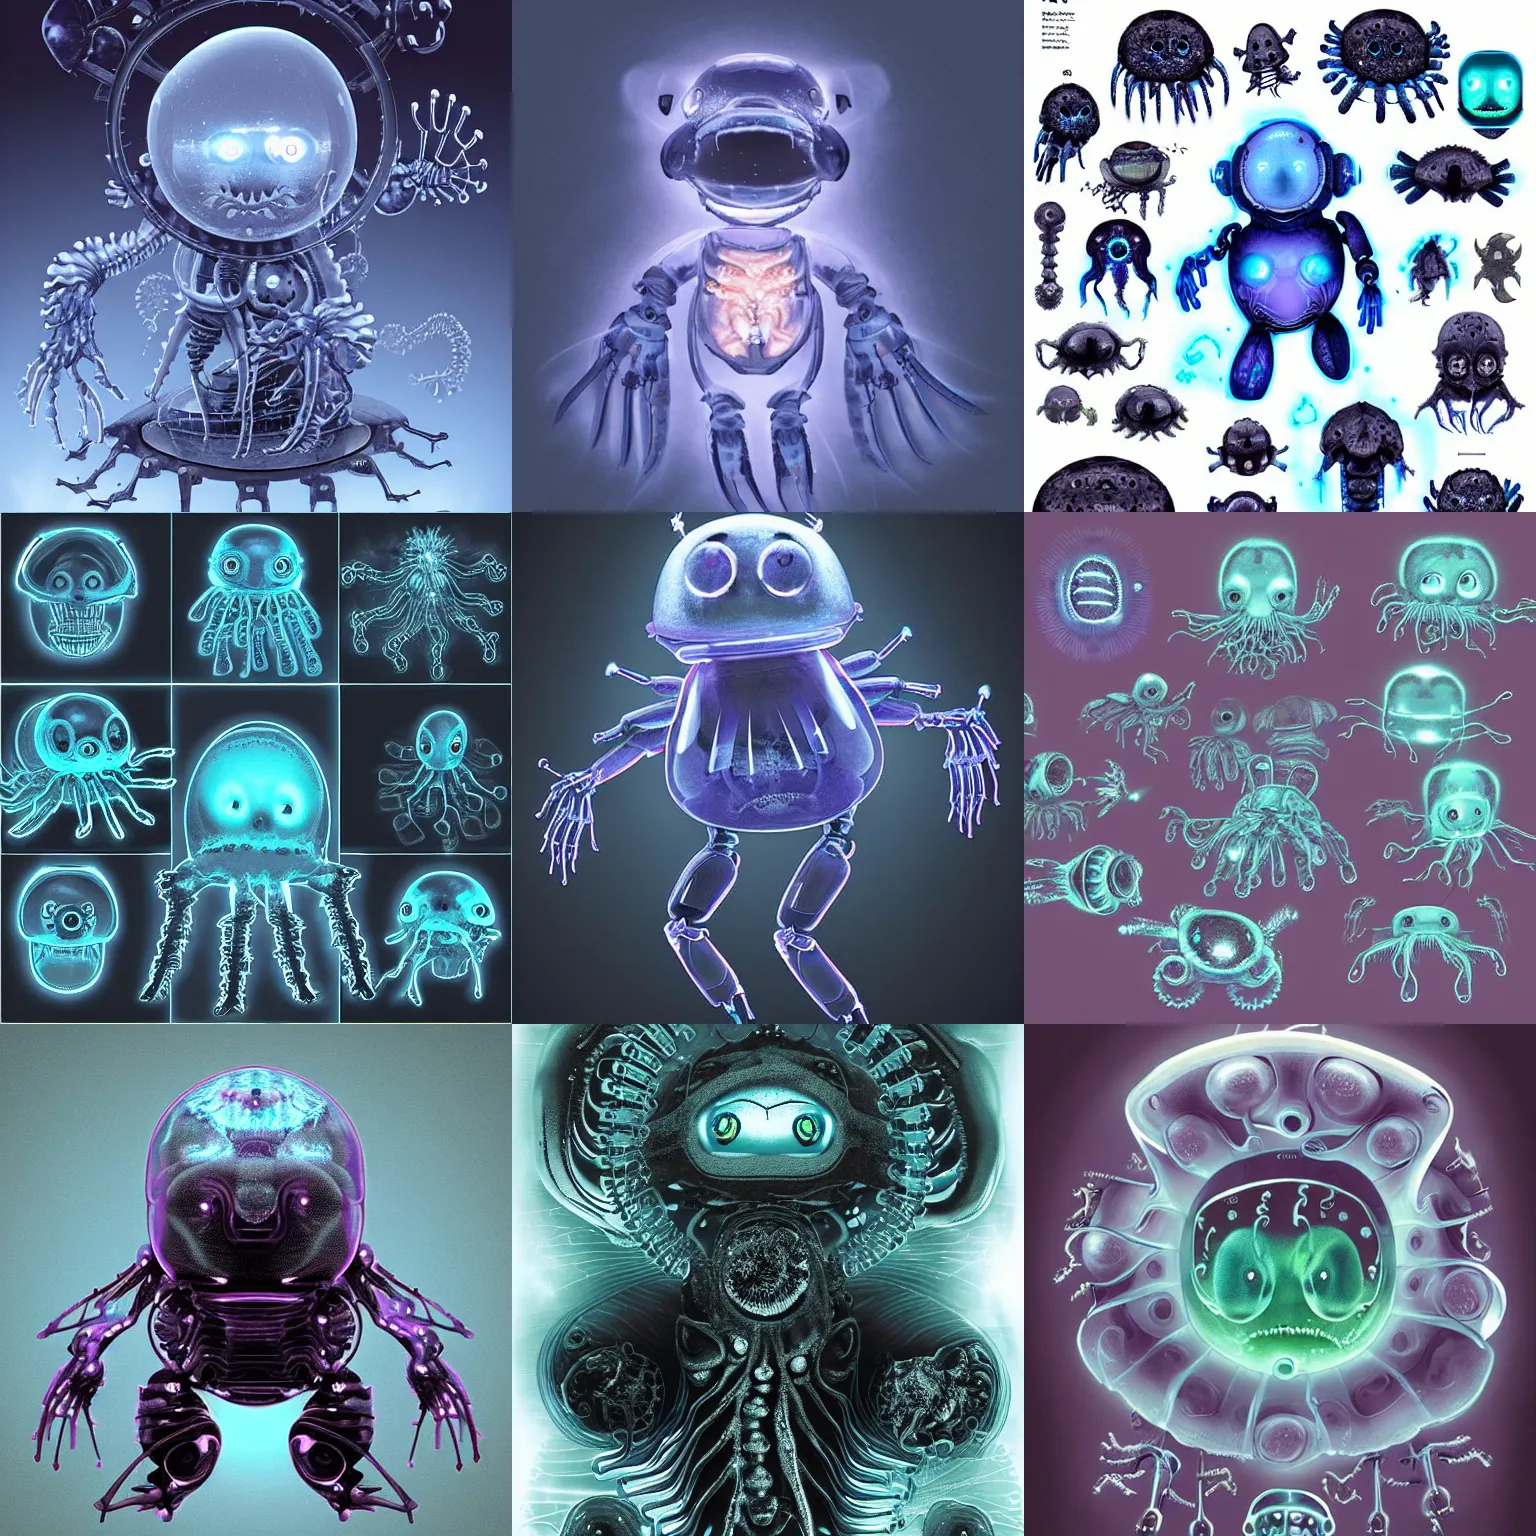 Prompt: cute! dark, cute baby robot jelly fish, ghost shrimp, biomechanical xray, deepsea, irobot, glowing from inside, gears, transistors, wrinkled, by Wayne Barlowe, Barreleye fish, translucent SSS, rimlight, dancing, fighting, bioluminescent screaming pictoplasma characterdesign toydesign toy monster creature, zbrush, octane, hardsurface modelling, artstation, cg society, by greg rutkowksi, by Eddie Mendoza, by Peter mohrbacher, by tooth wu, night, cyberpunk